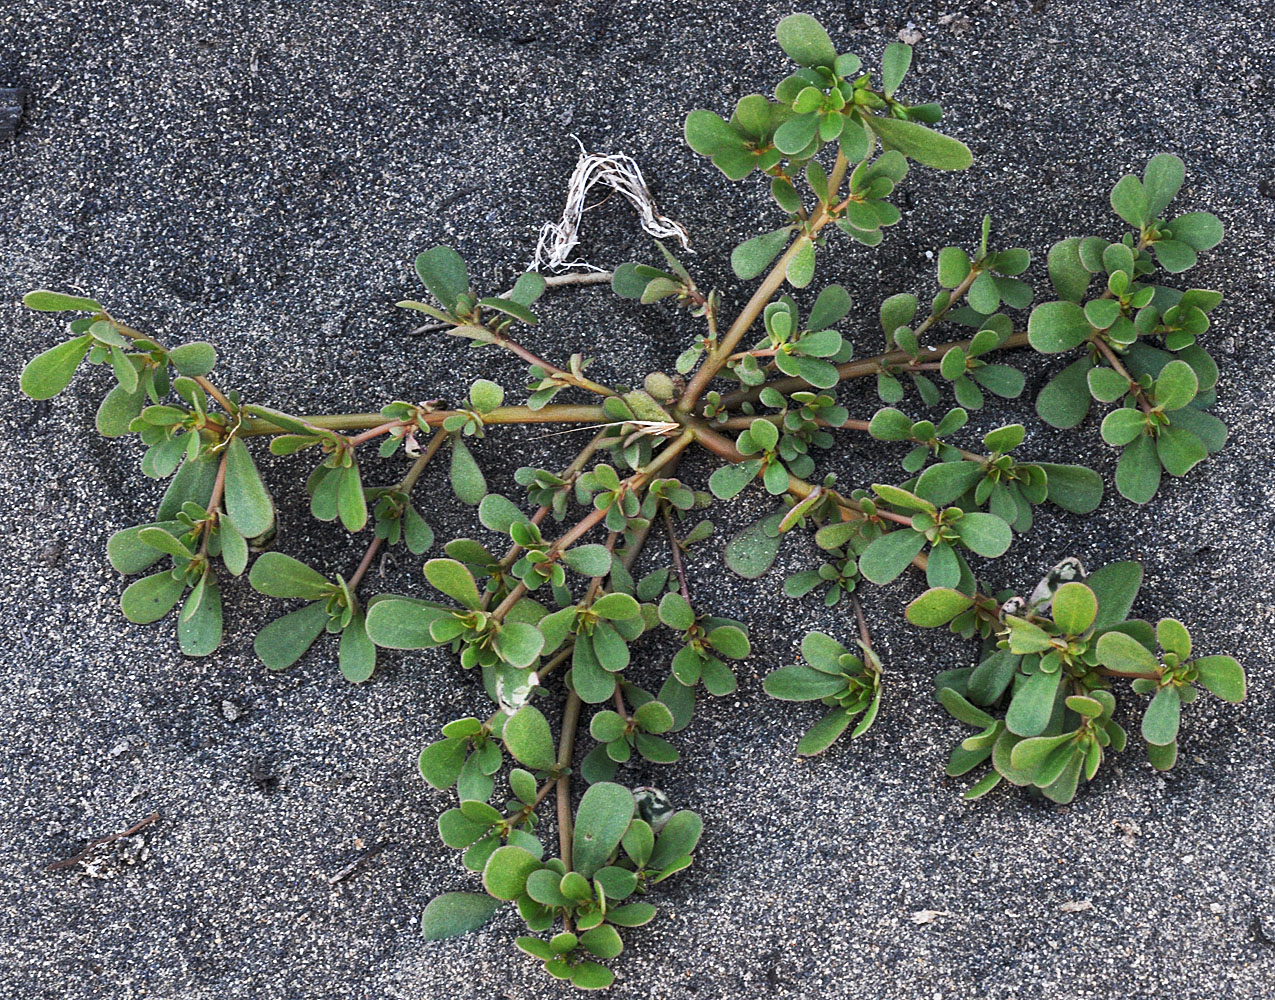 Flora of Eastern Washington Image: Portulaca oleracea